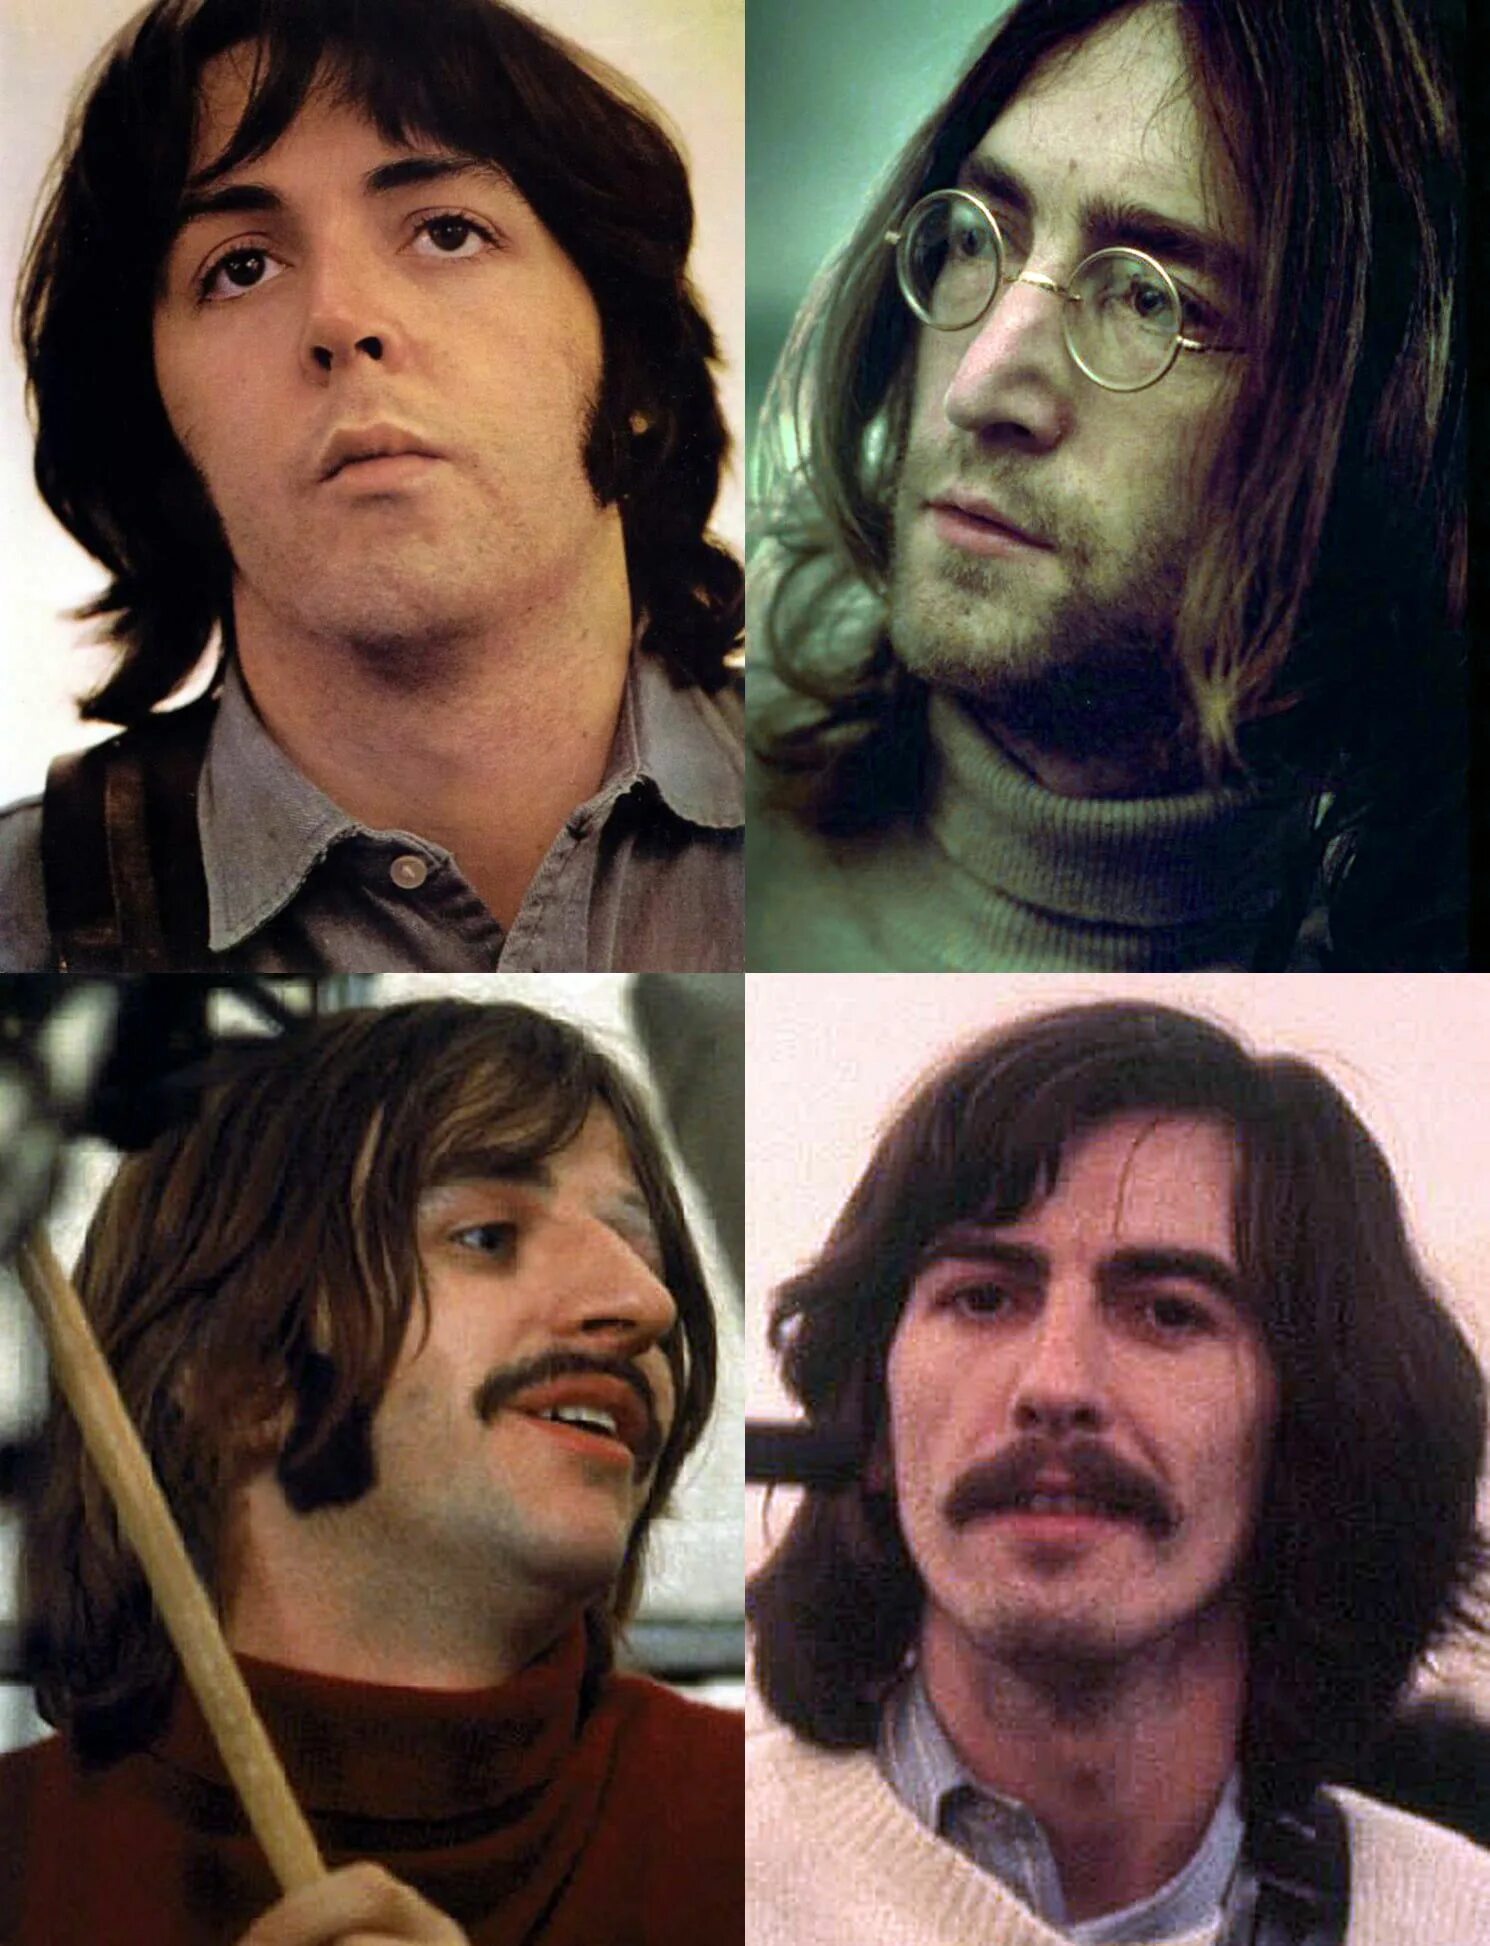 The Beatles February 1969. Битлз 1969. The Beatles 1969. MCCARTNEY 3 February 1969. 4 che